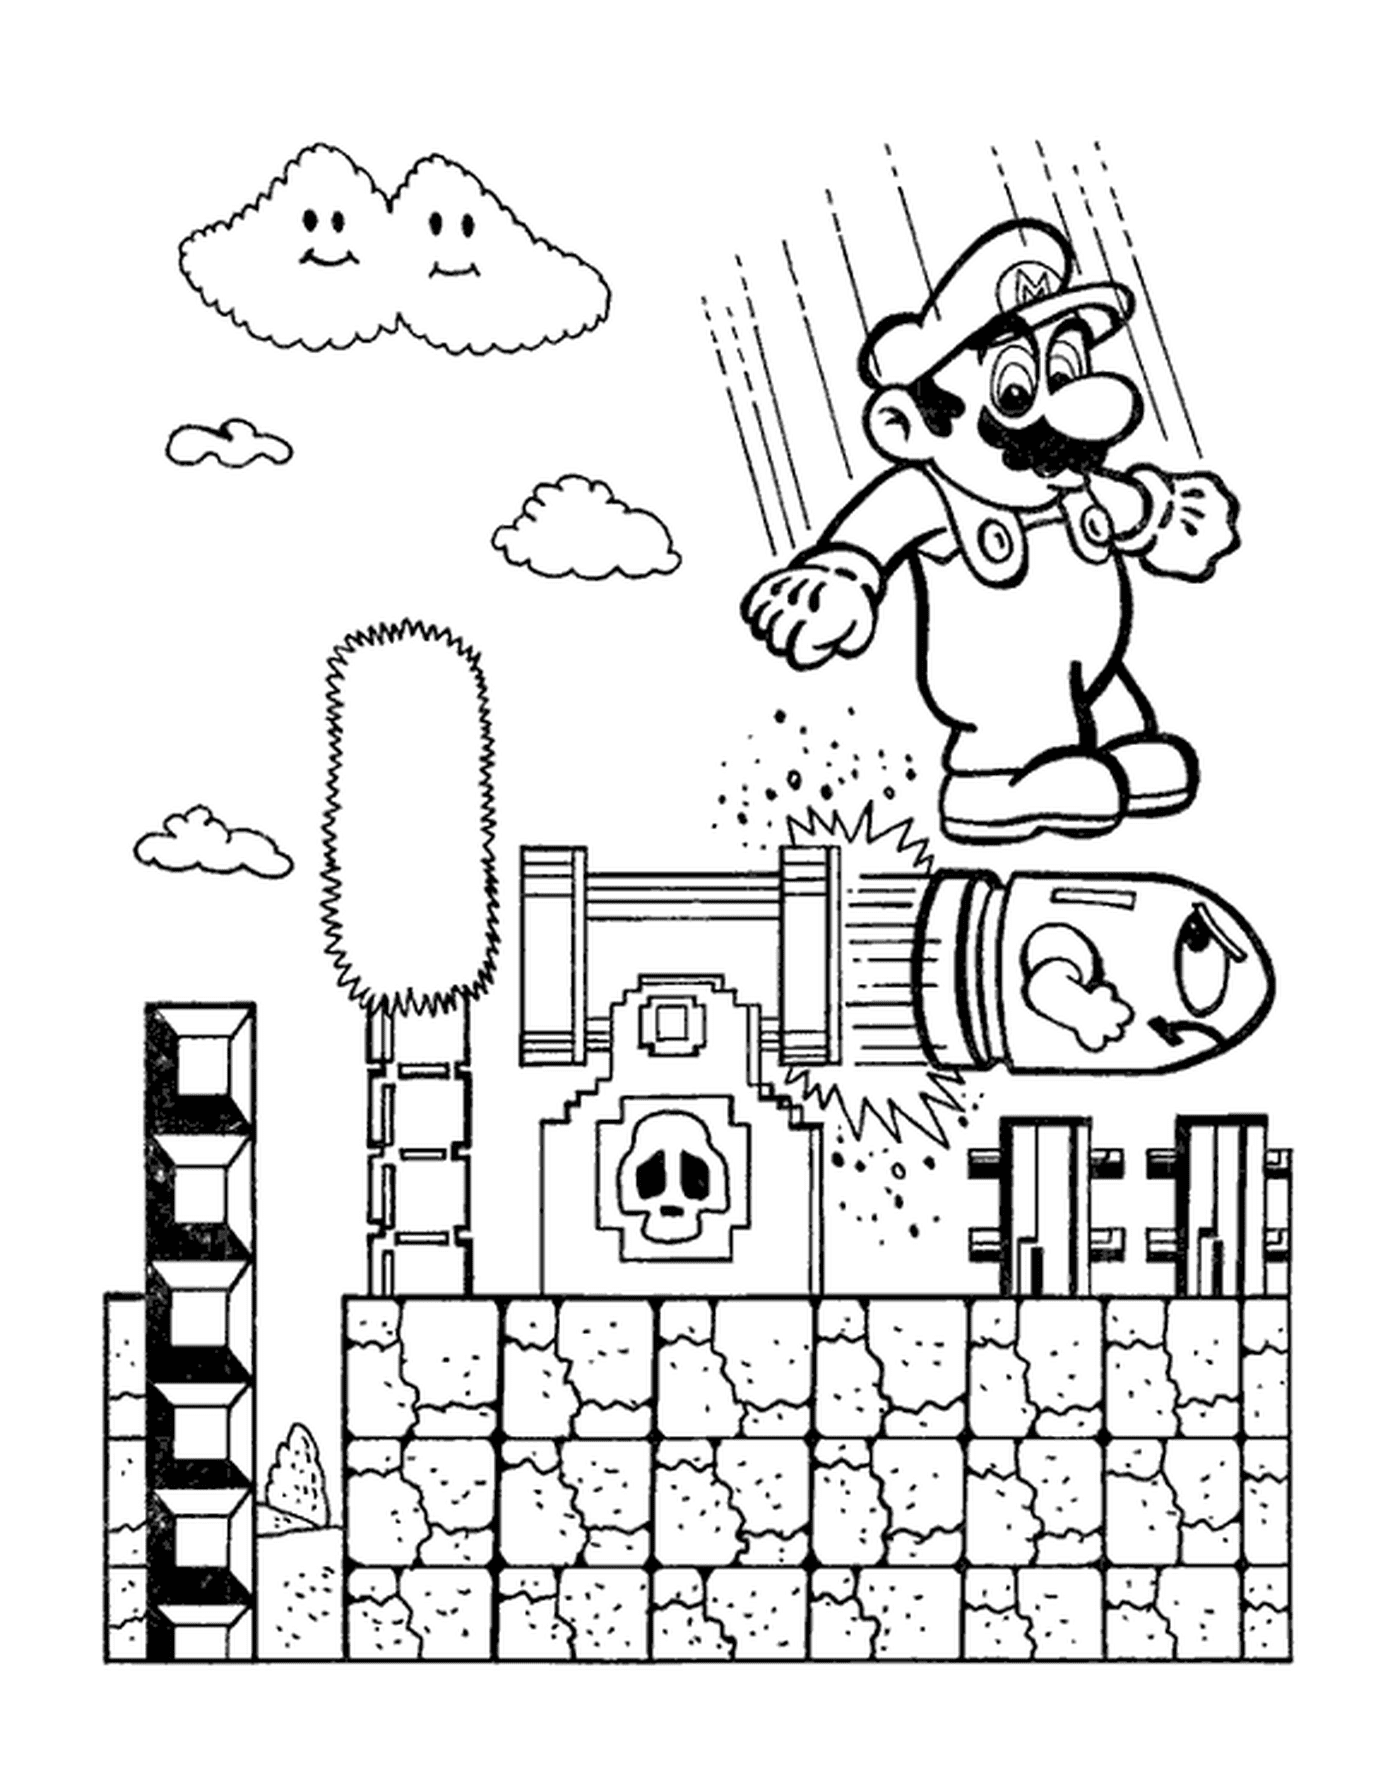  Mario jumps on a dangerous bomb 